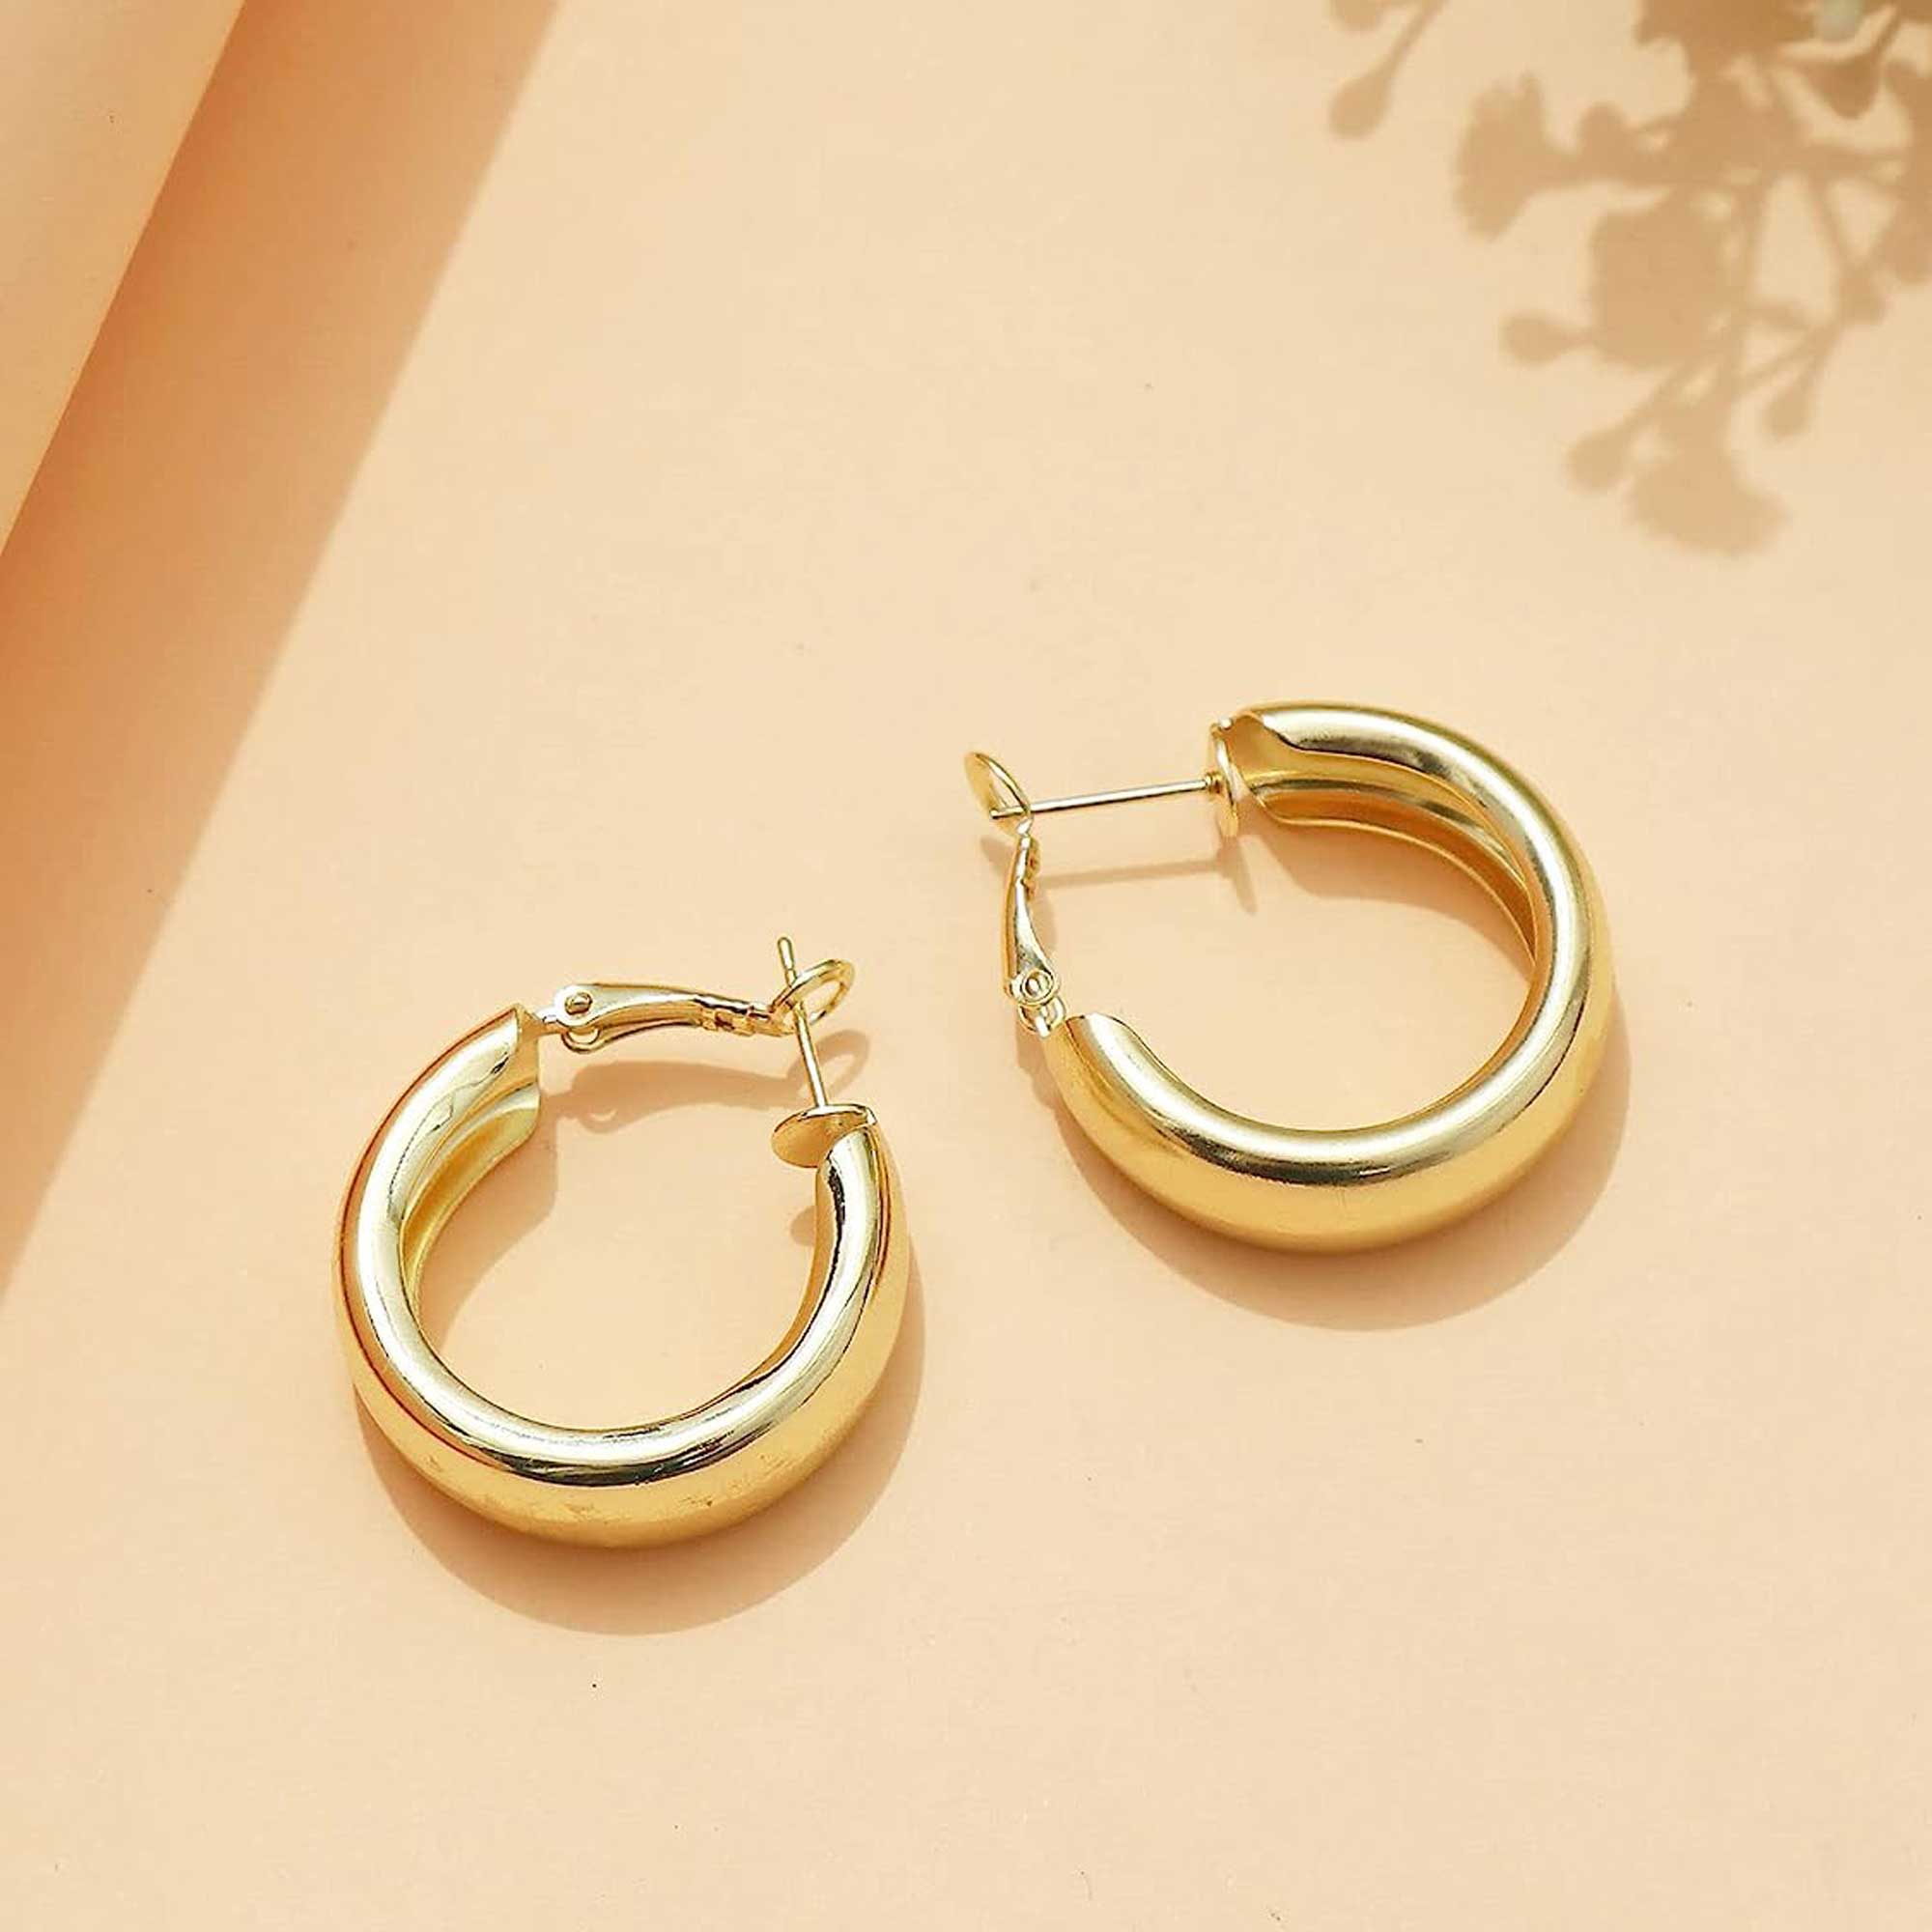 Buy WOWSHOW Large Big Gold Hoop Earrings Wide Flat Hoop Earrings Thick Hoops  for Women at Amazon.in